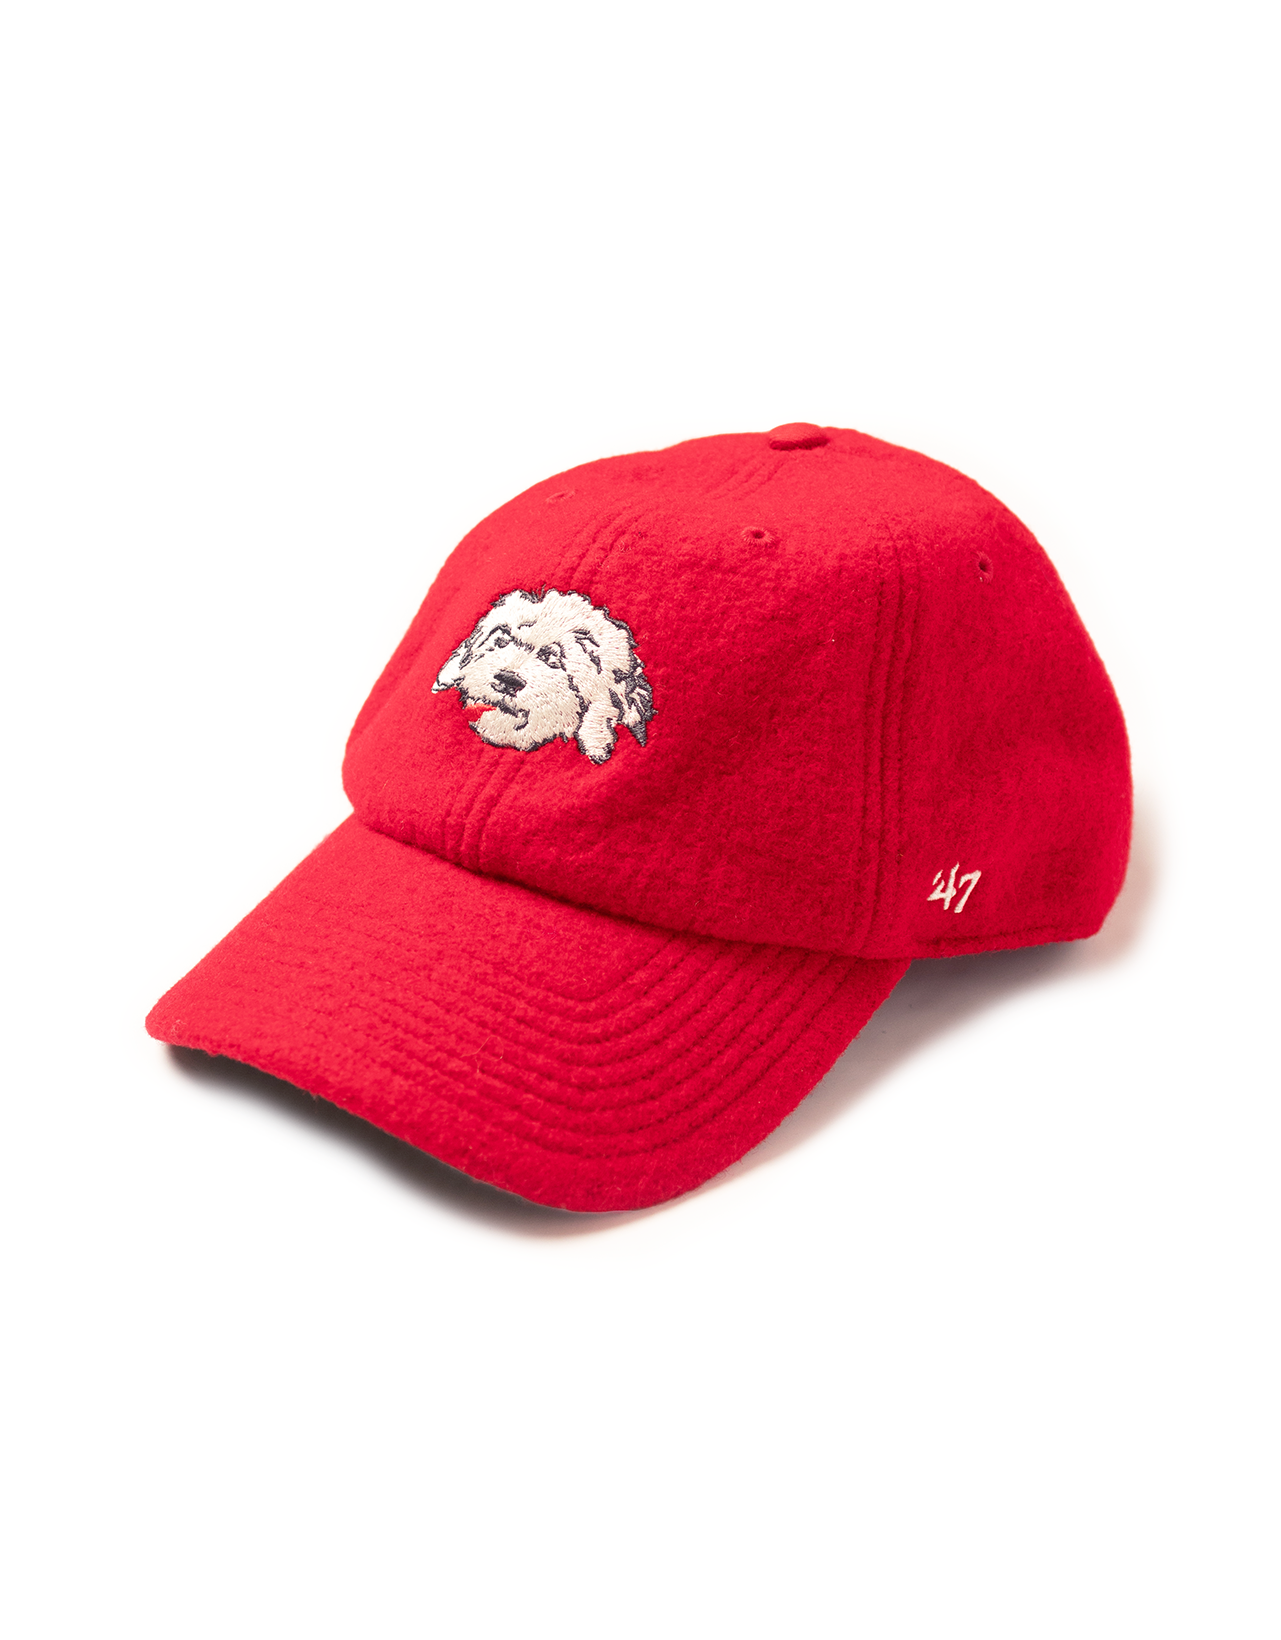 SHAGGY DOG BASEBALL CAP - RED